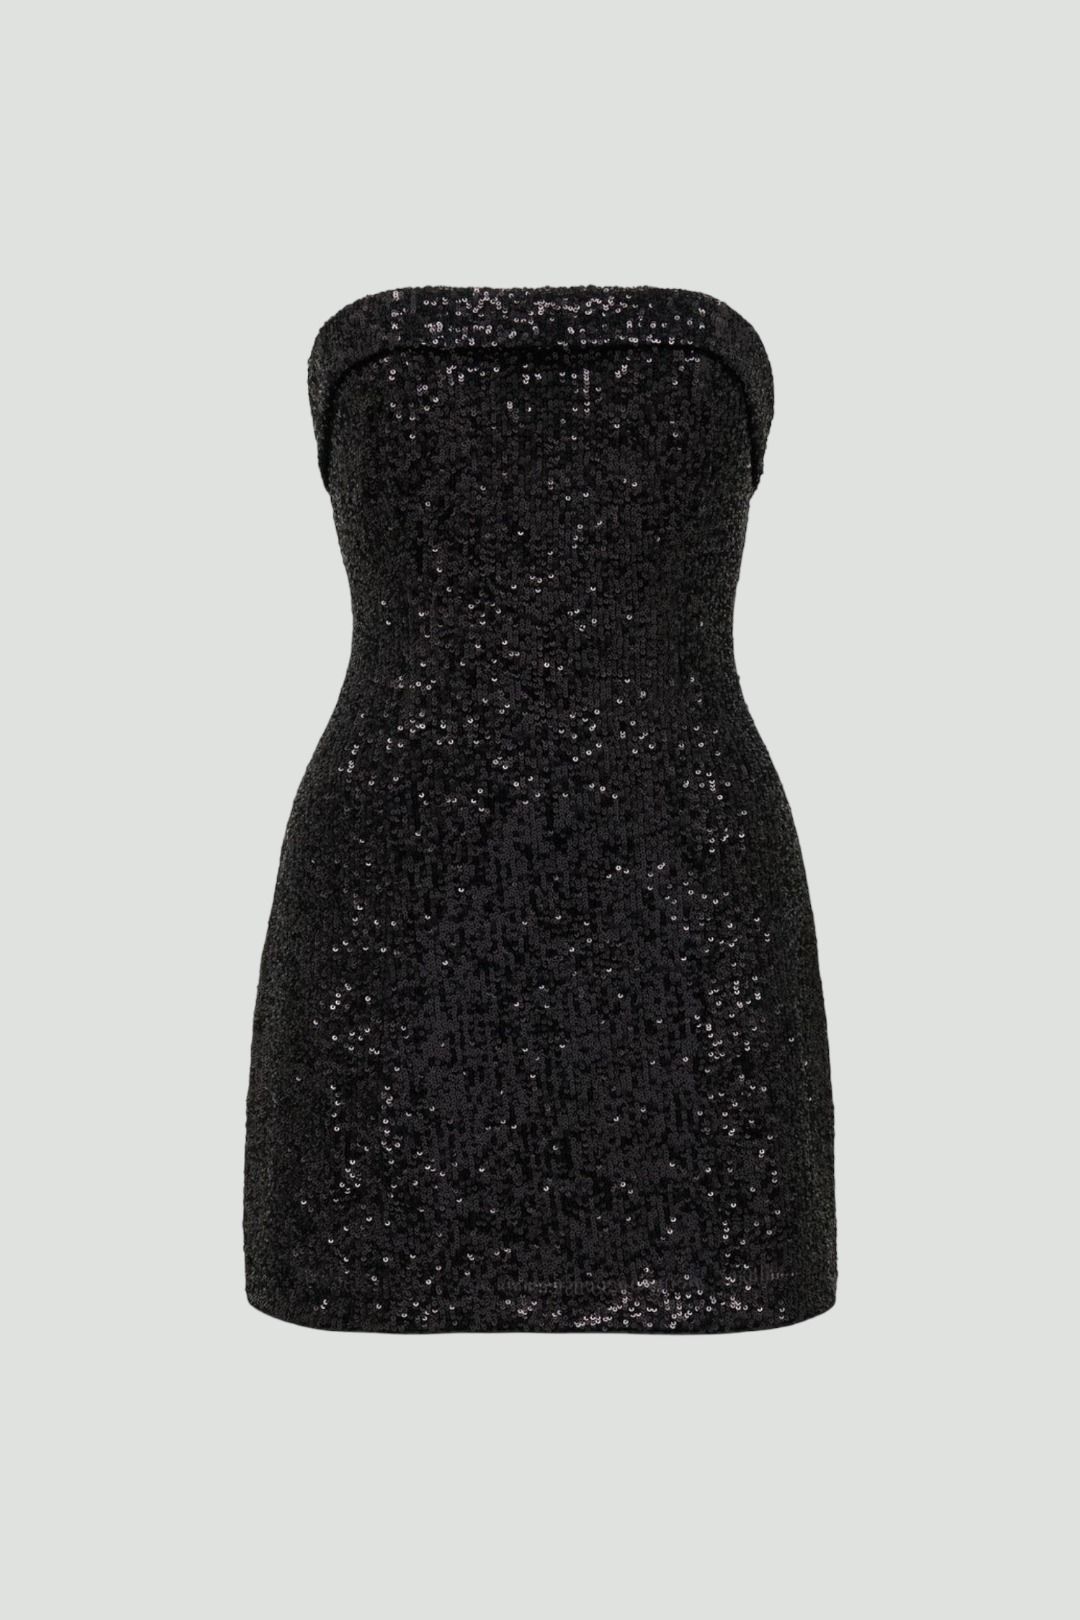 Shop Classic Black Dresses for Women Online - Forever New